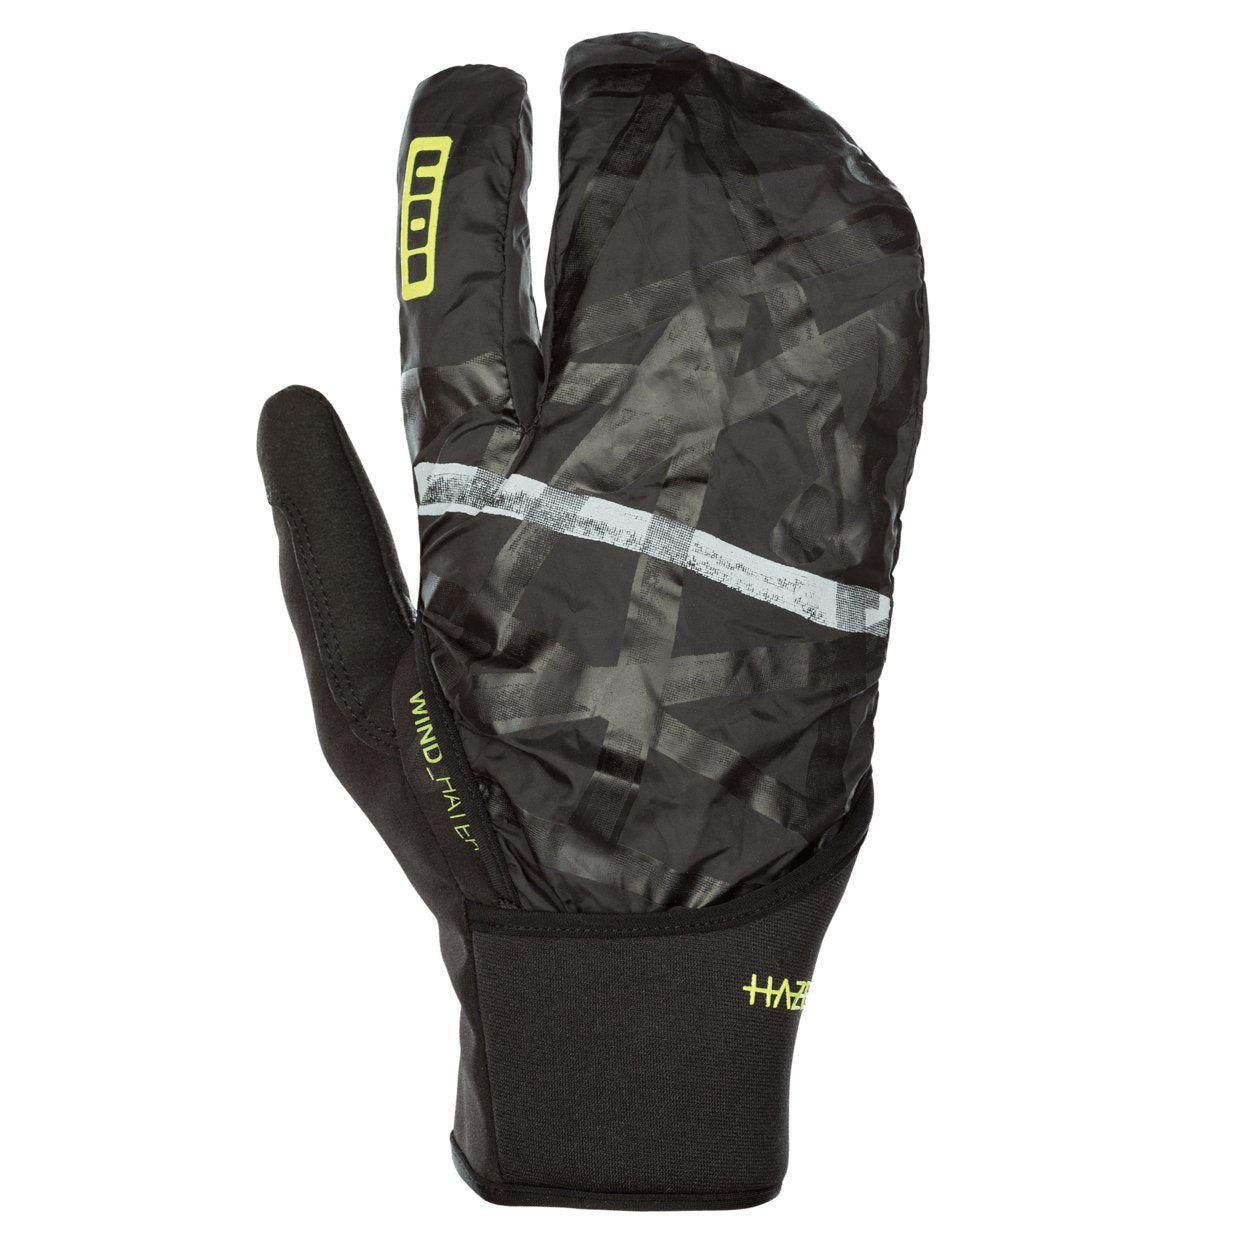 ION MTB Gloves Haze Amp 2022 - Worthing Watersports - 9008415763832 - Gloves - ION Bike